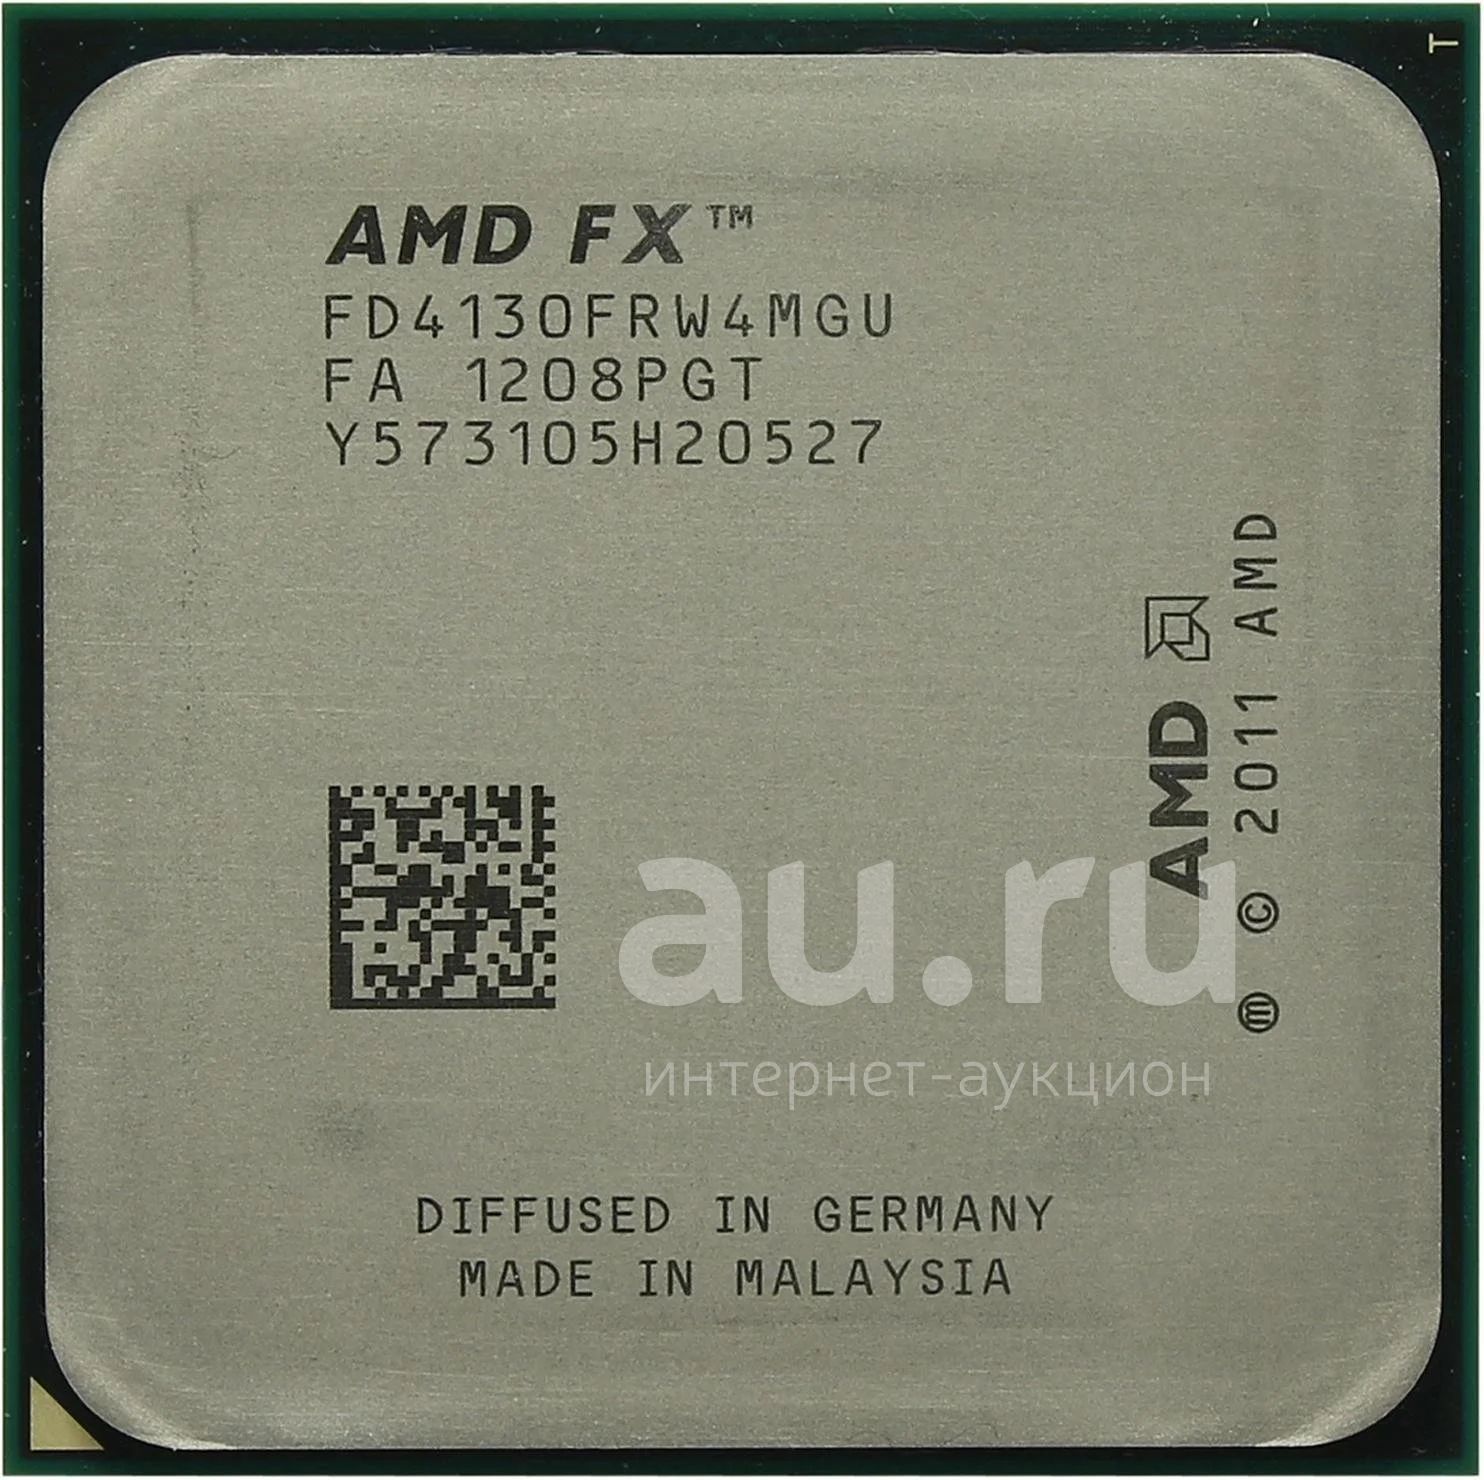 4130 сокет. FX 4130. AMD FX-4130 am3, 4 x 3800 МГЦ. Процессор AMD FX-4130 am3, 4 x 3800 МГЦ, OEM фото.